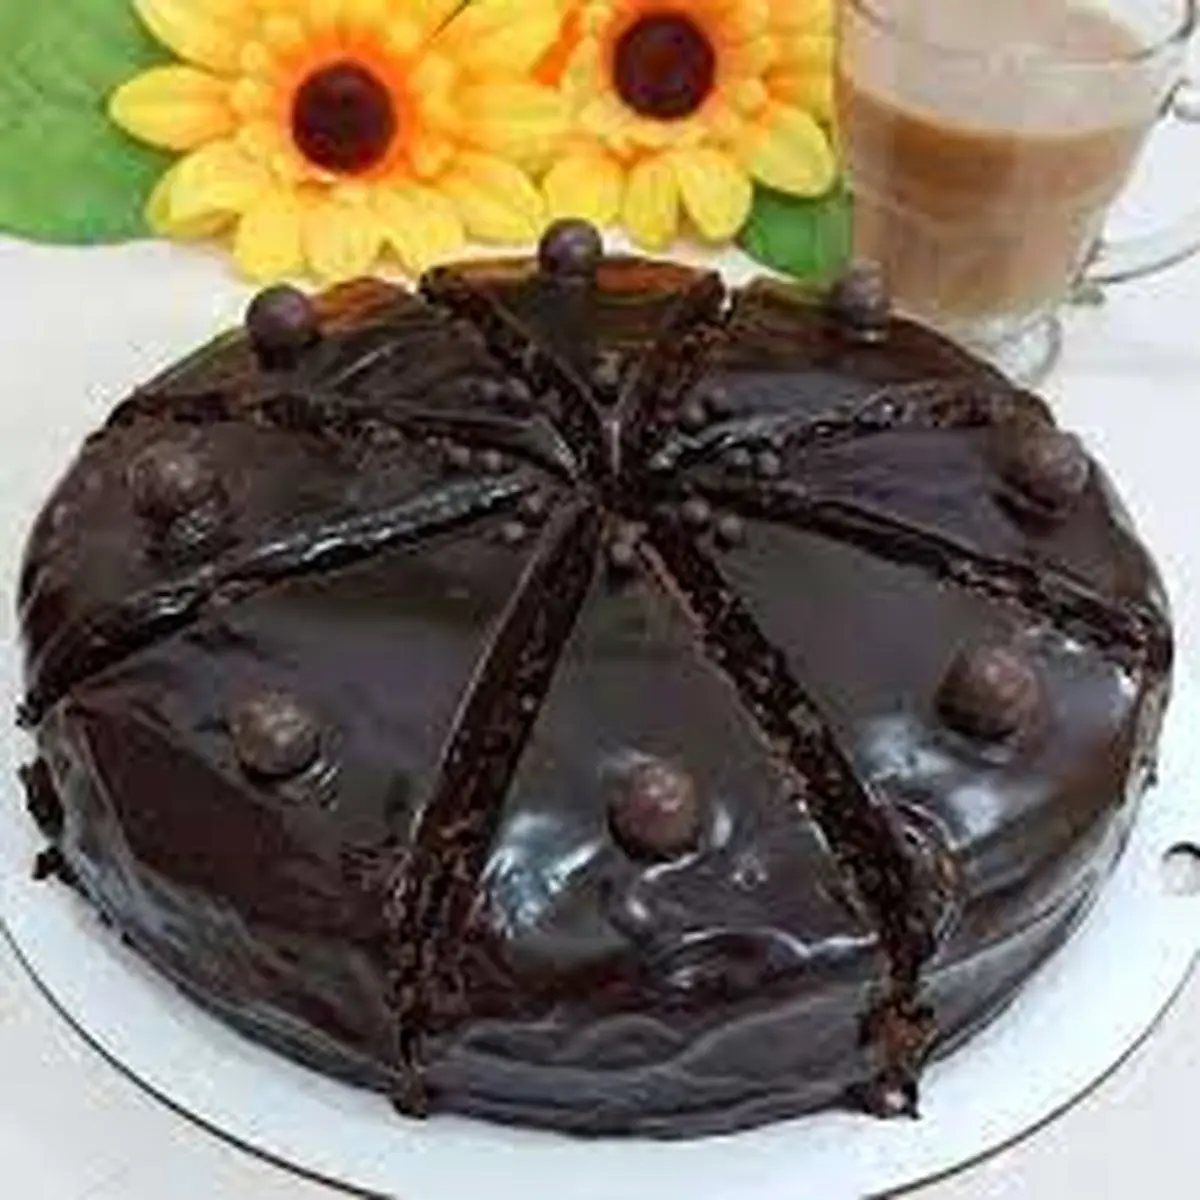  کیک شکلاتی خیلی عالیه!| دستور پخت  کیک شکلاتی